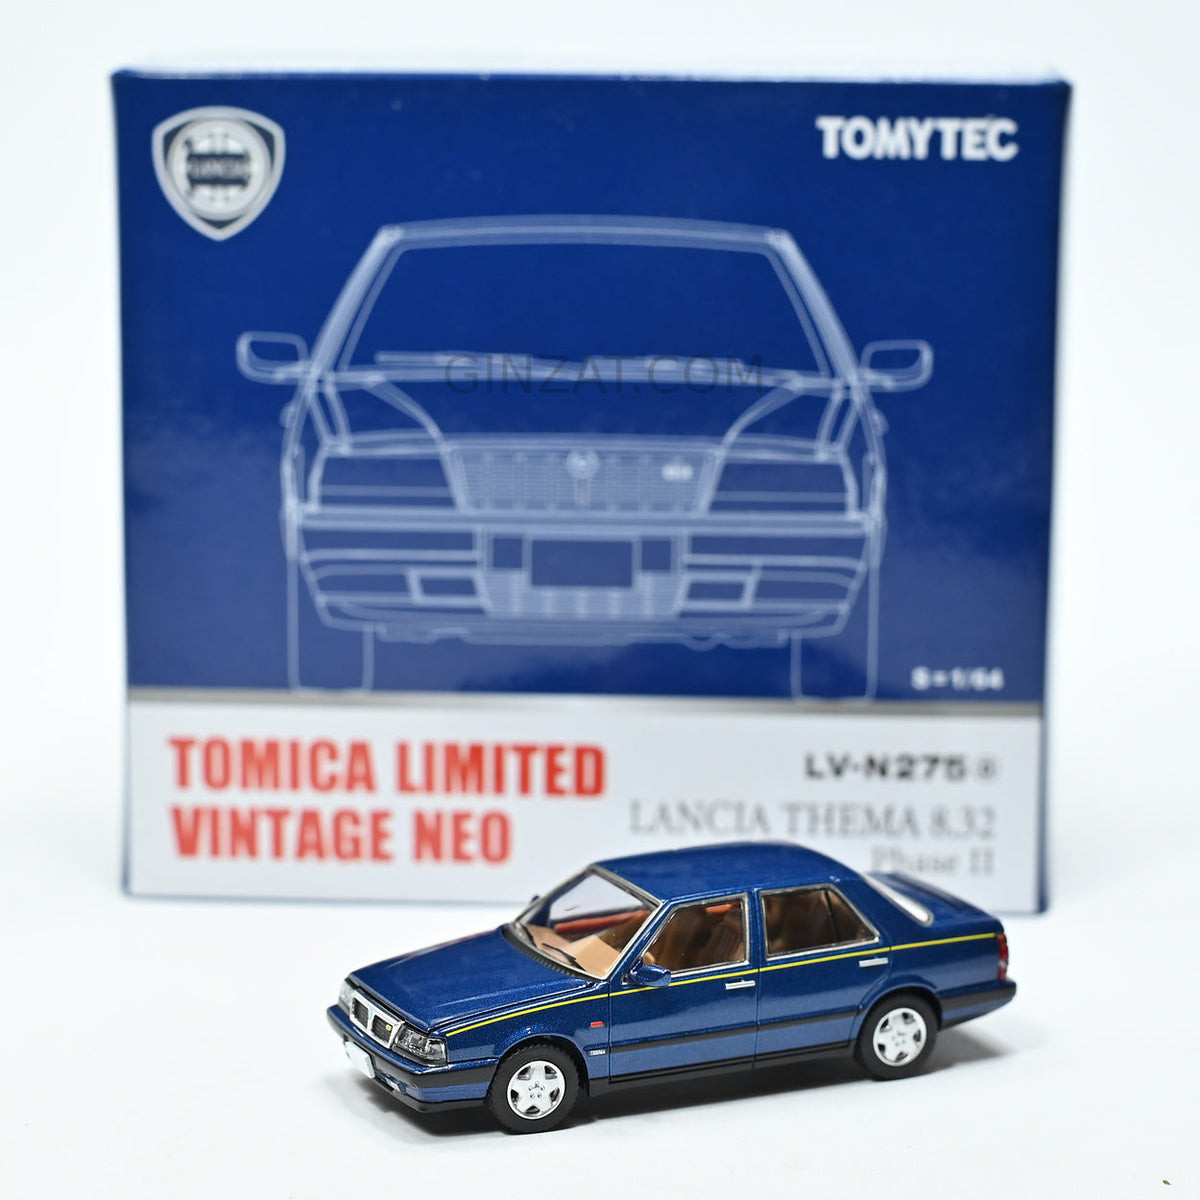 Tomica Limited Vintage Neo LV-N277b Lancia Theme 8.32 Phase I (Green)